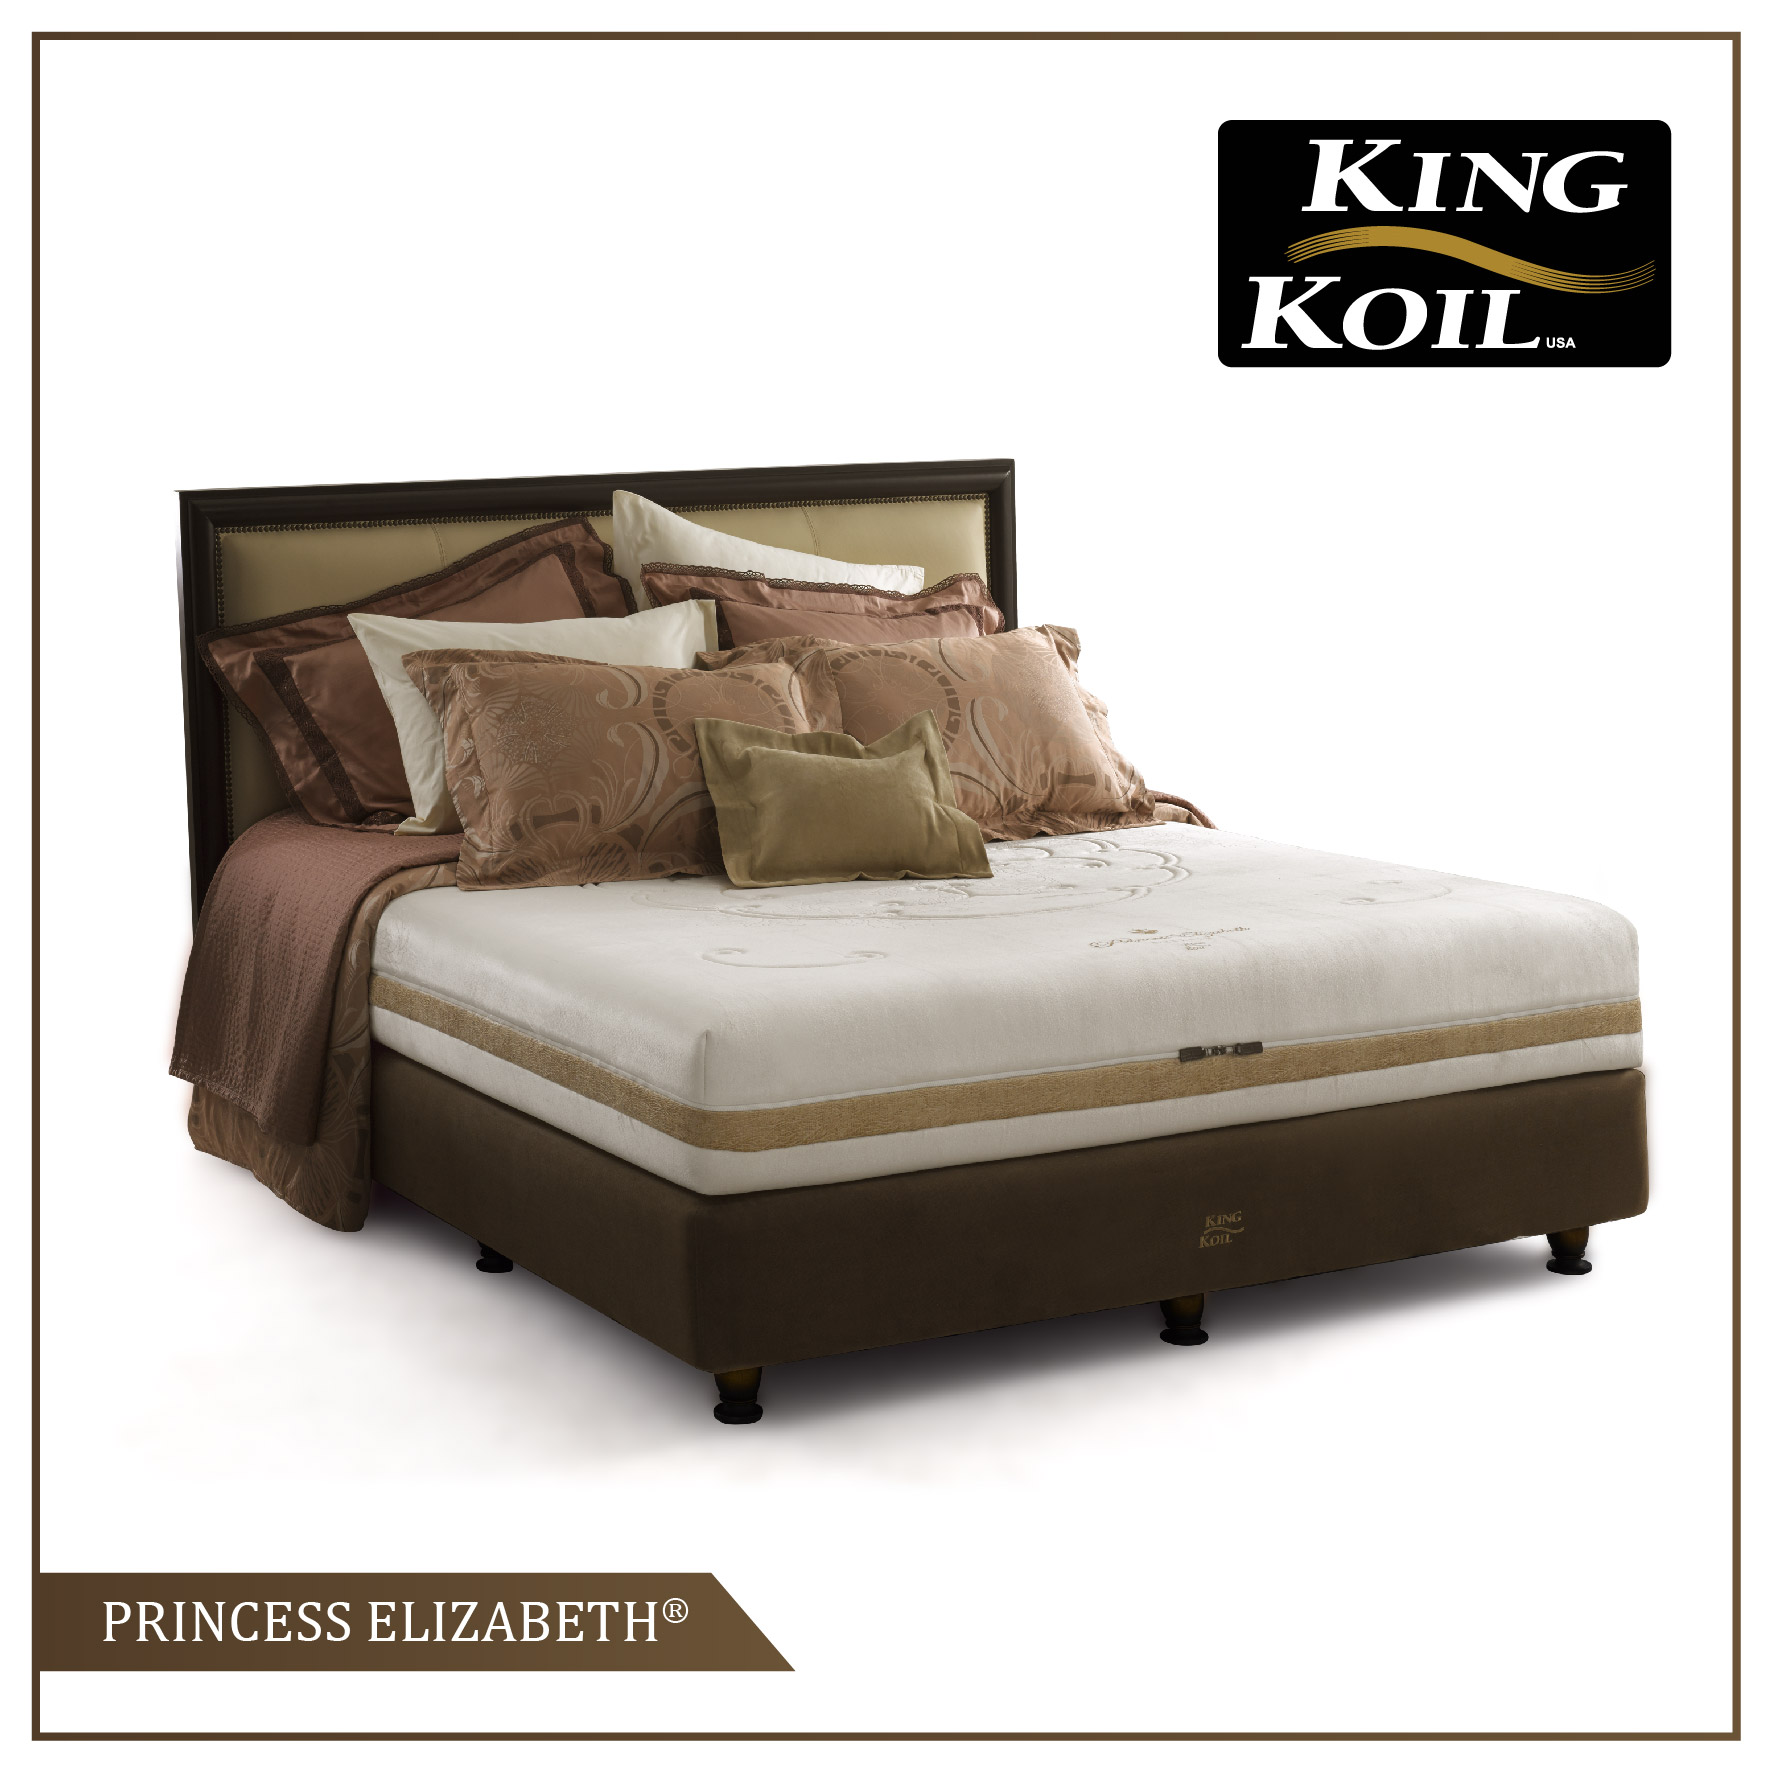 King Koil Latex Bed Princess Elizabeth - Mattress Only